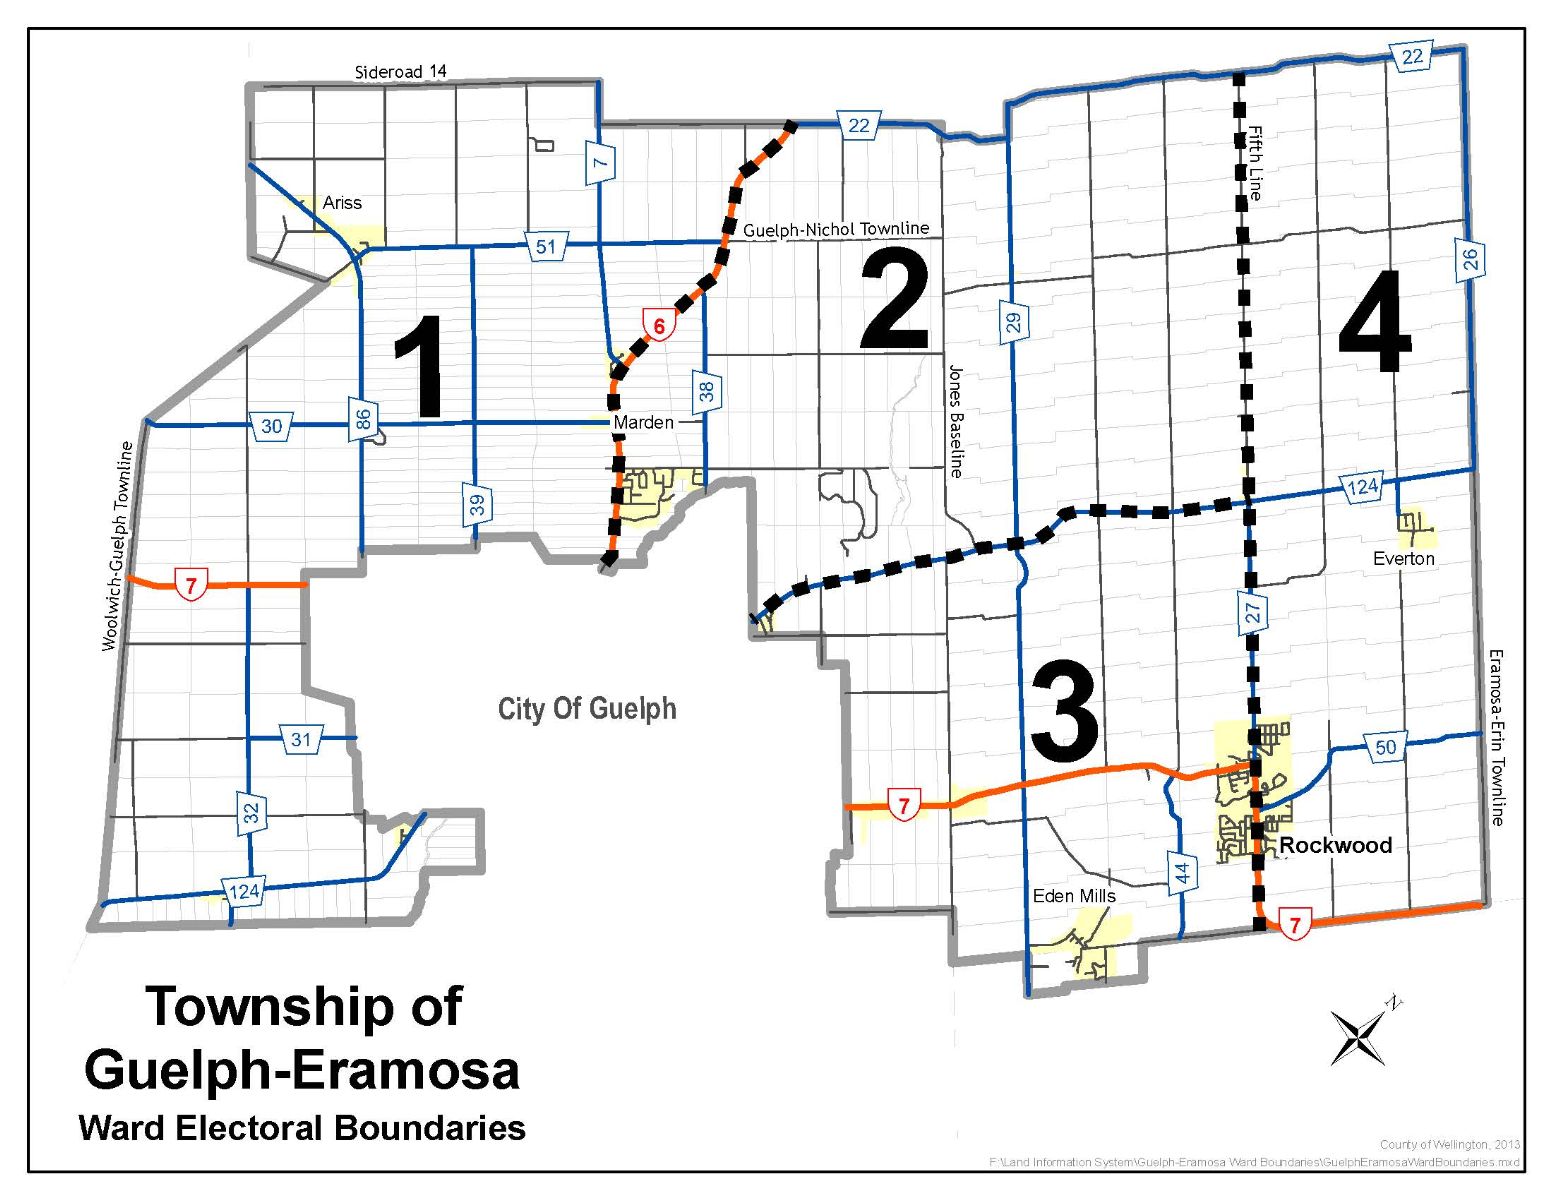 Guelph/Eramosa Township Ward Map